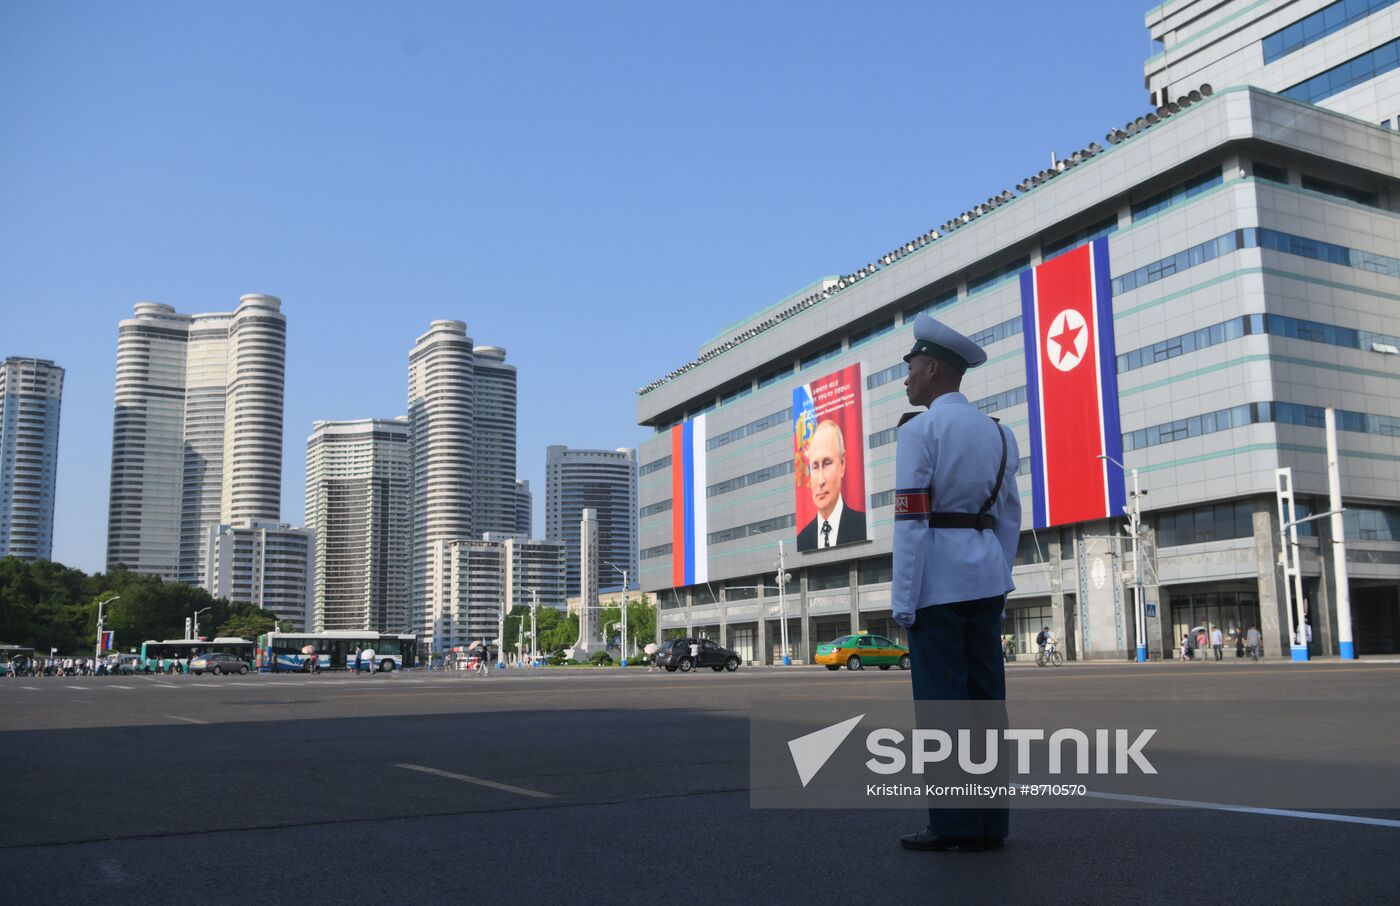 North Korea Putin Visit Preparations